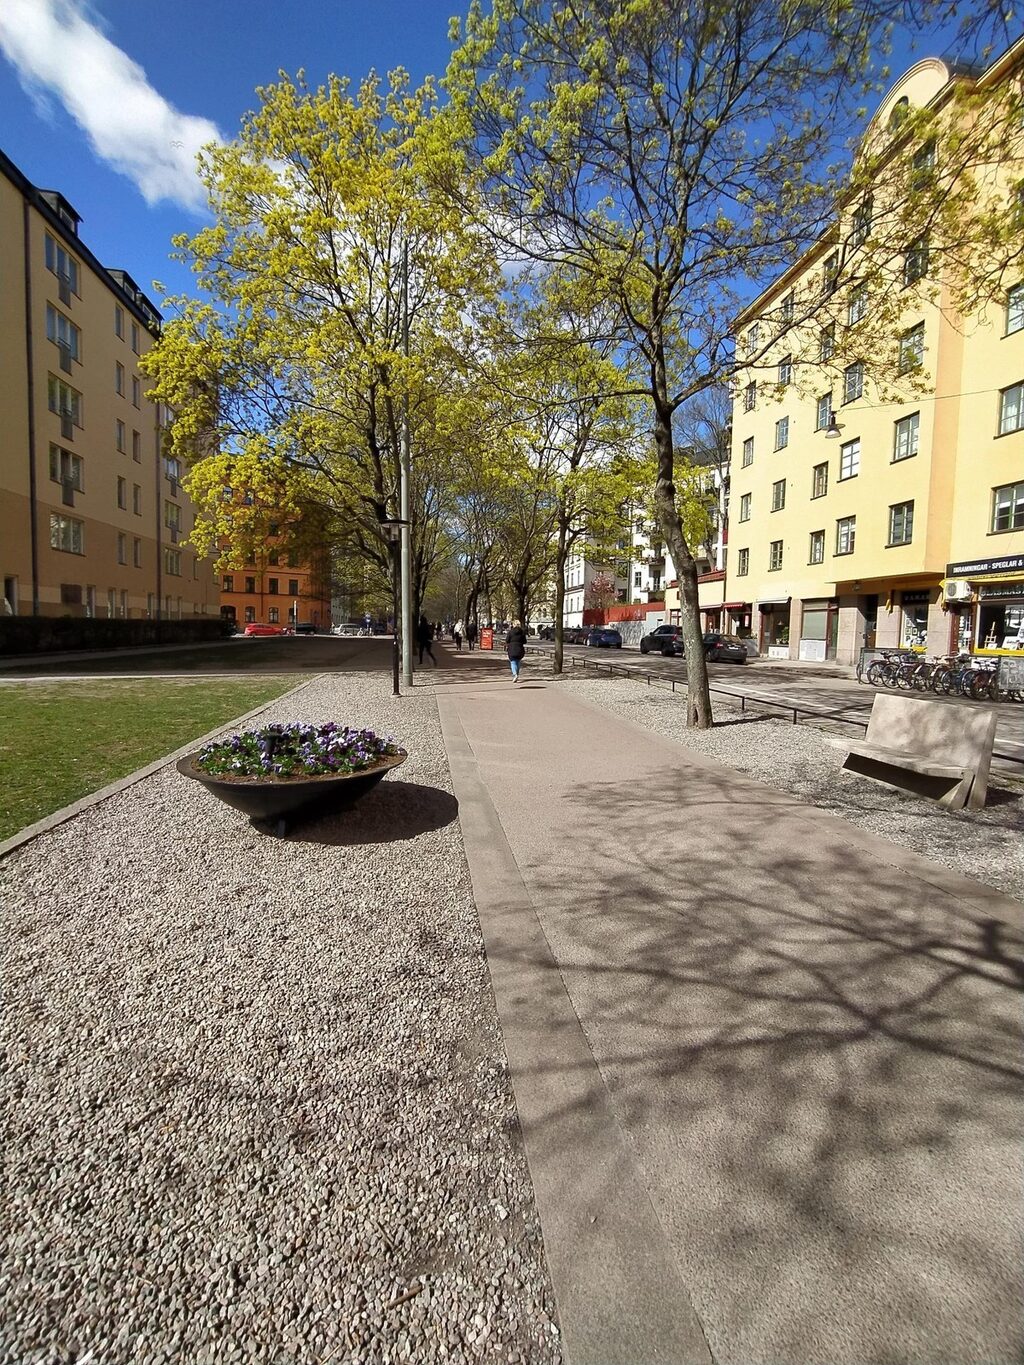 Lägenhetsbyte - Katarina Bangata 27, 116 39 Stockholm